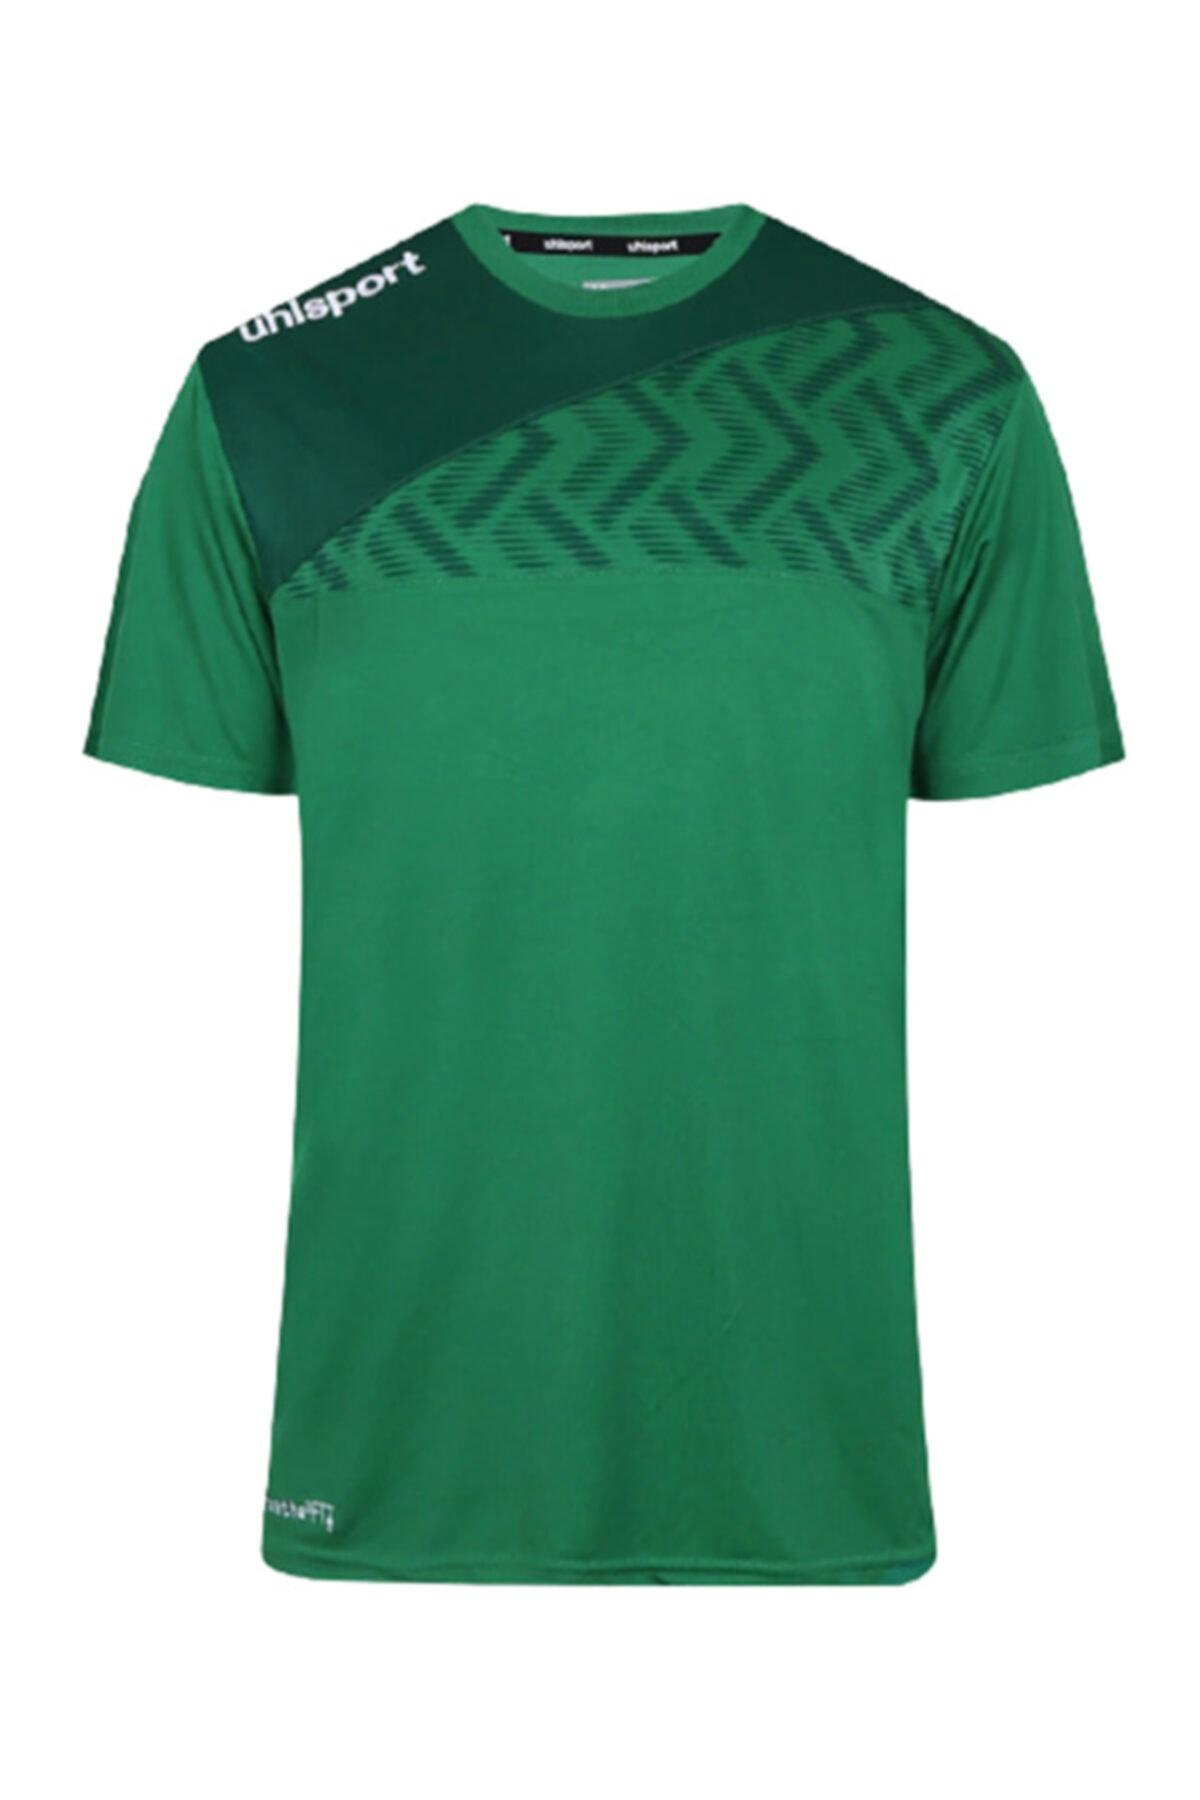 UHLSPORT  Antrenman T-shirt Rıgel yeşil